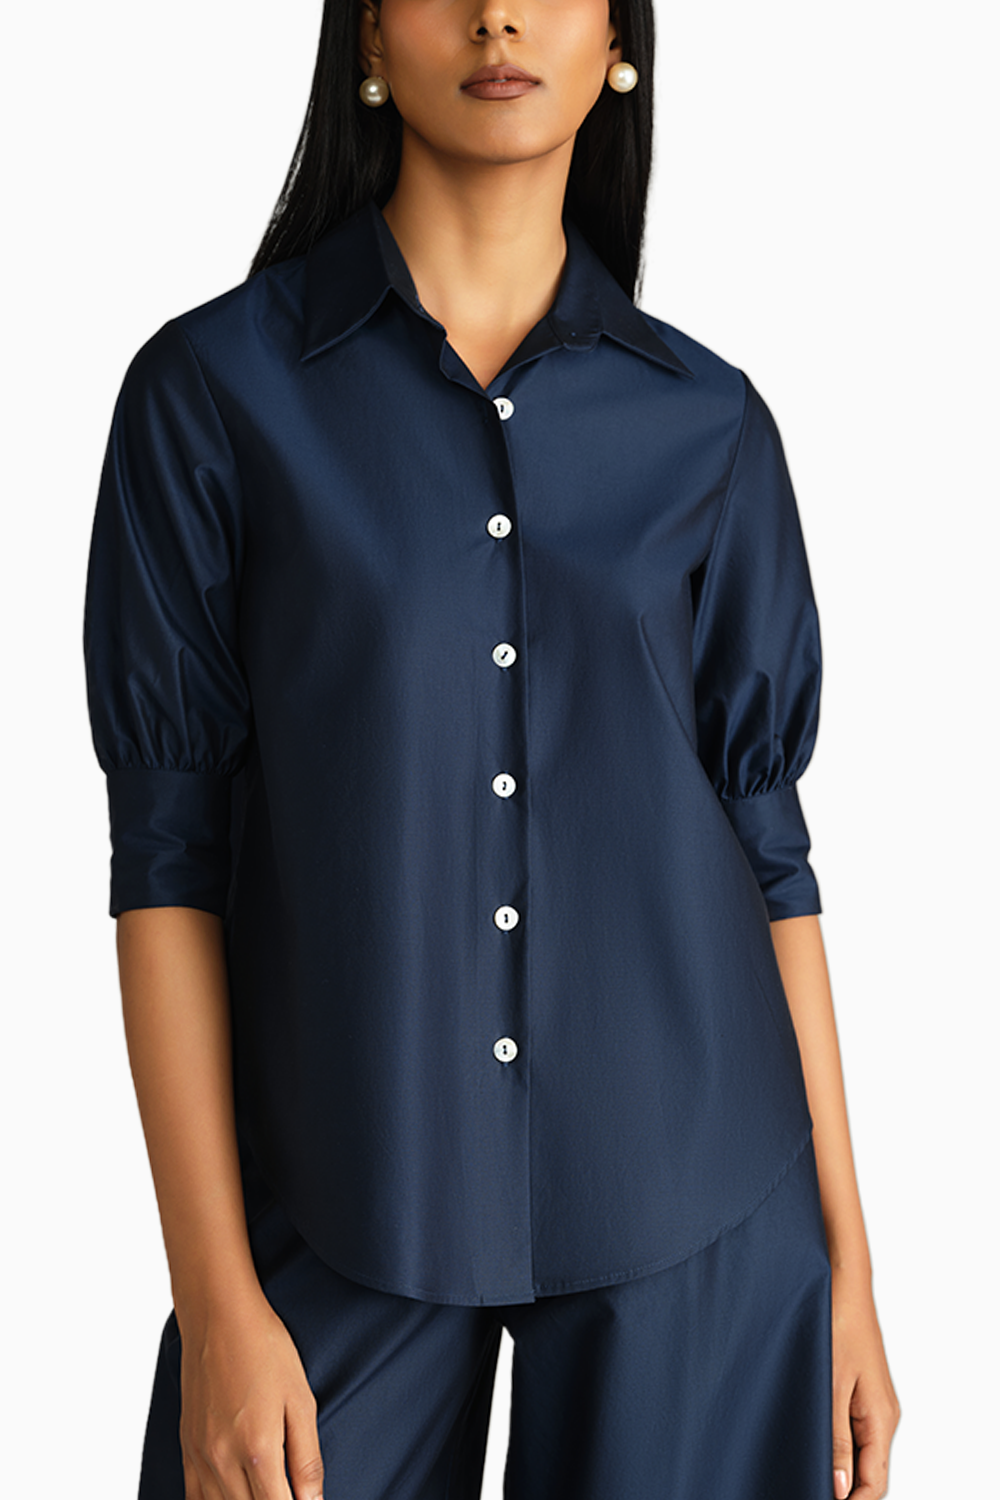 Navy Blue Egyptian Cotton Short-Sleeved Shirt